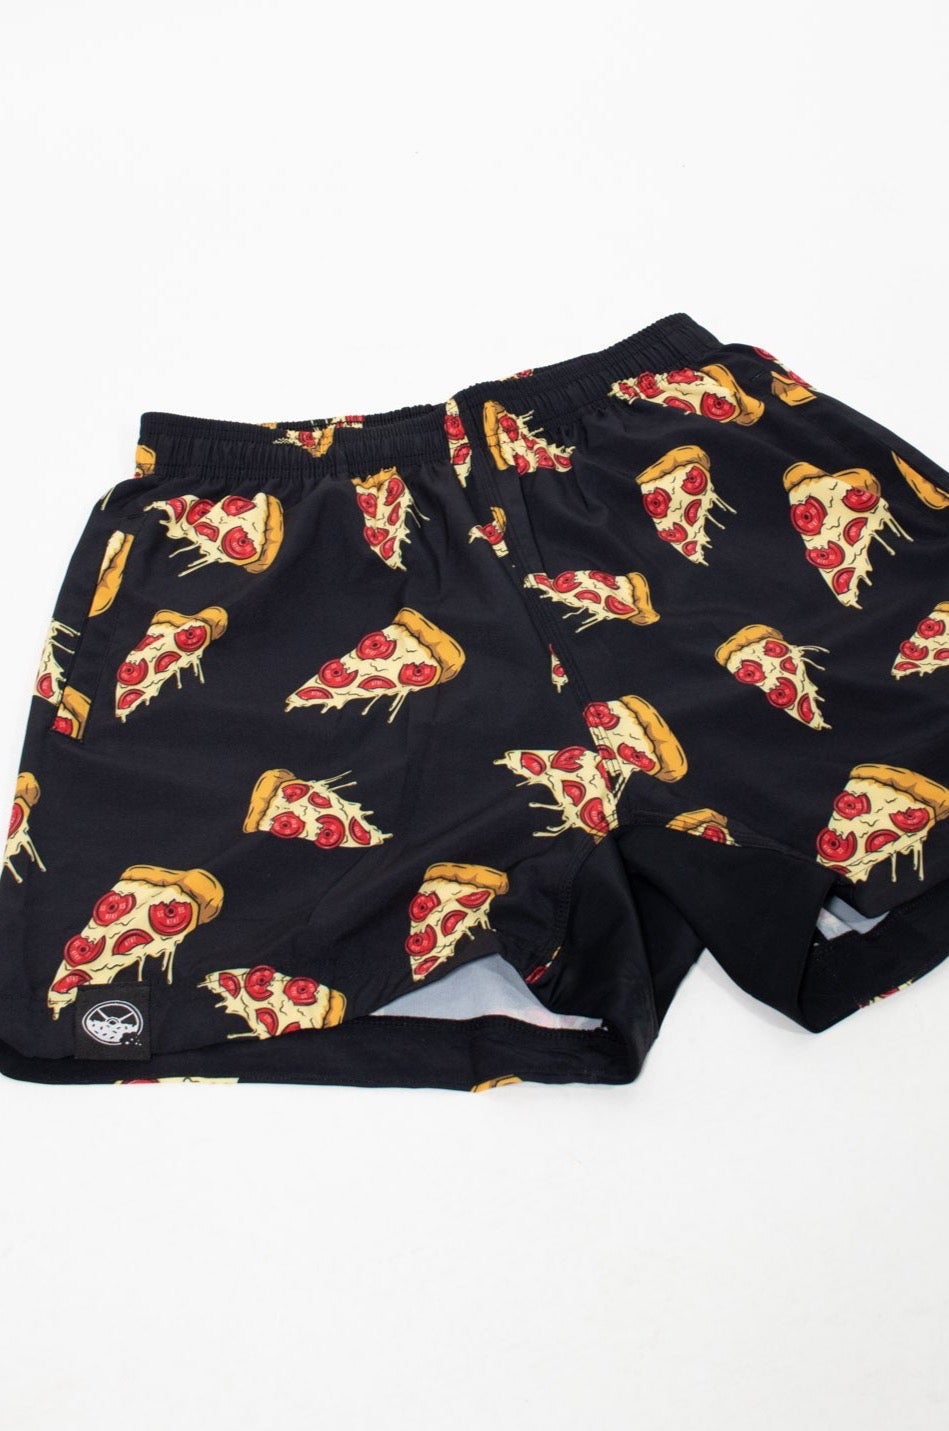 Kinda Fit Kinda Fat Plateroni Pizza 5.5" Training Shorts